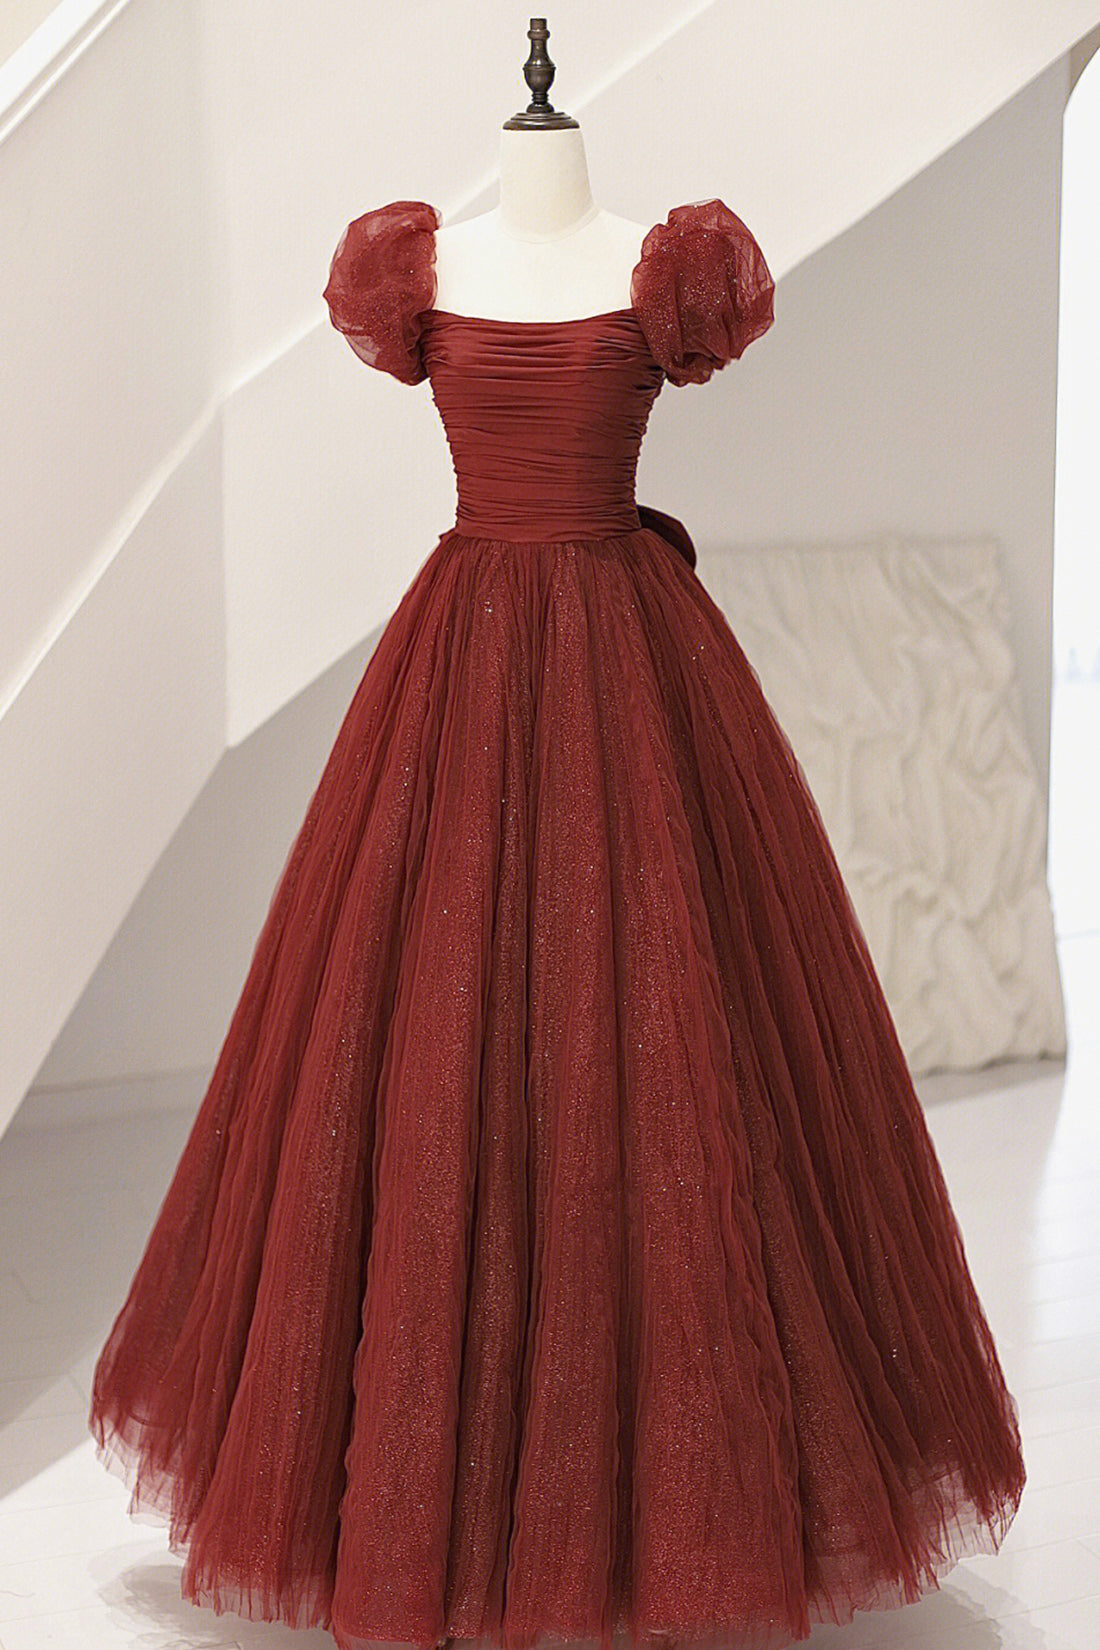 Wedding Ideas, Burgundy Tulle Long A-Line Prom Dress, Cute Short Sleeve Evening Dress